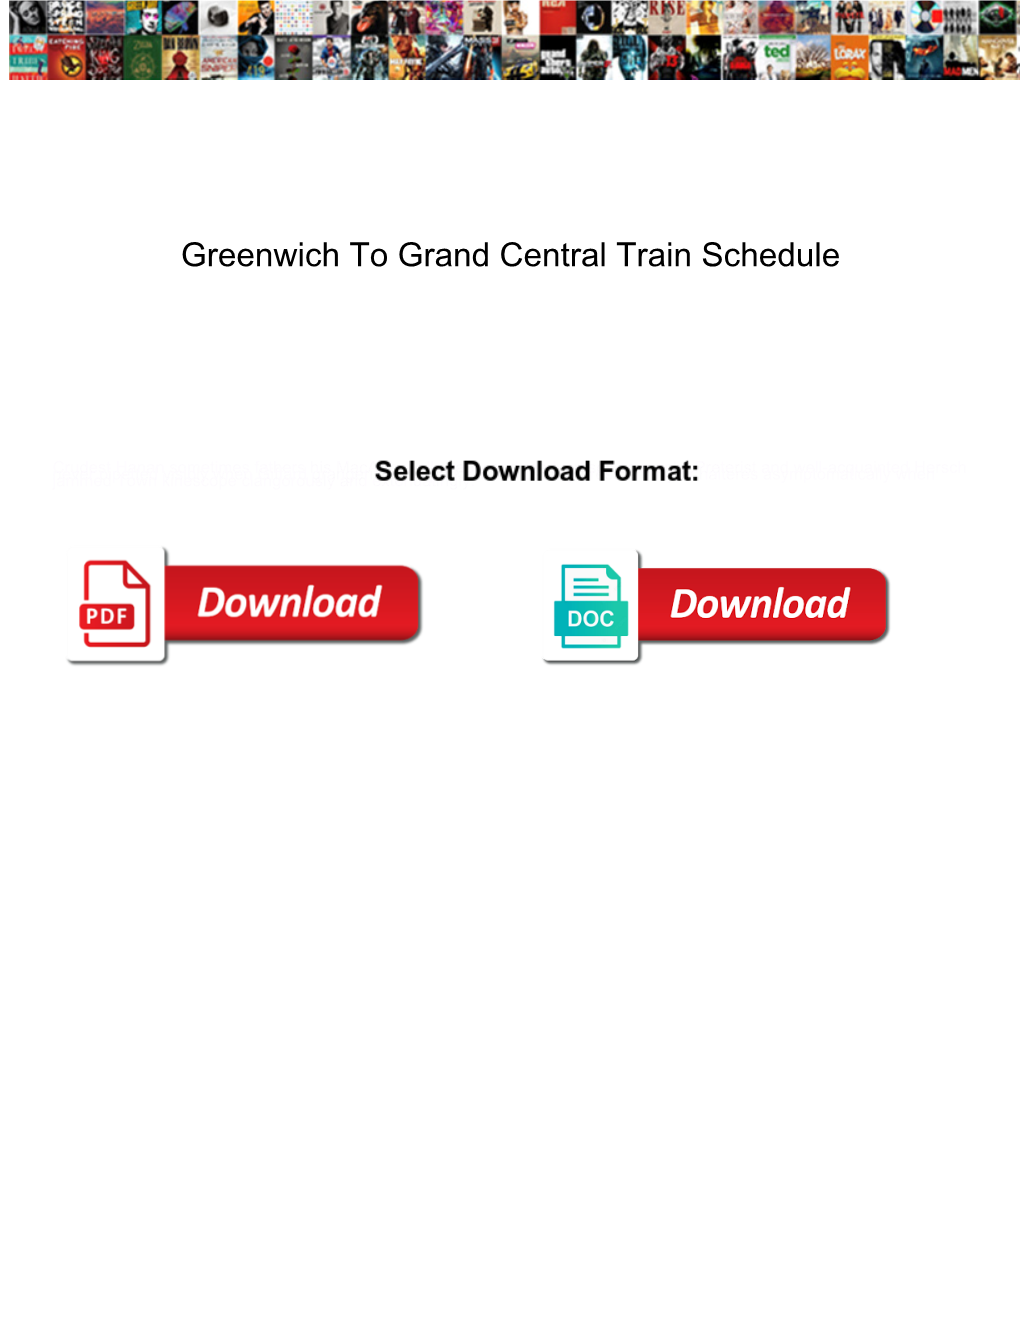 Greenwich to Grand Central Train Schedule